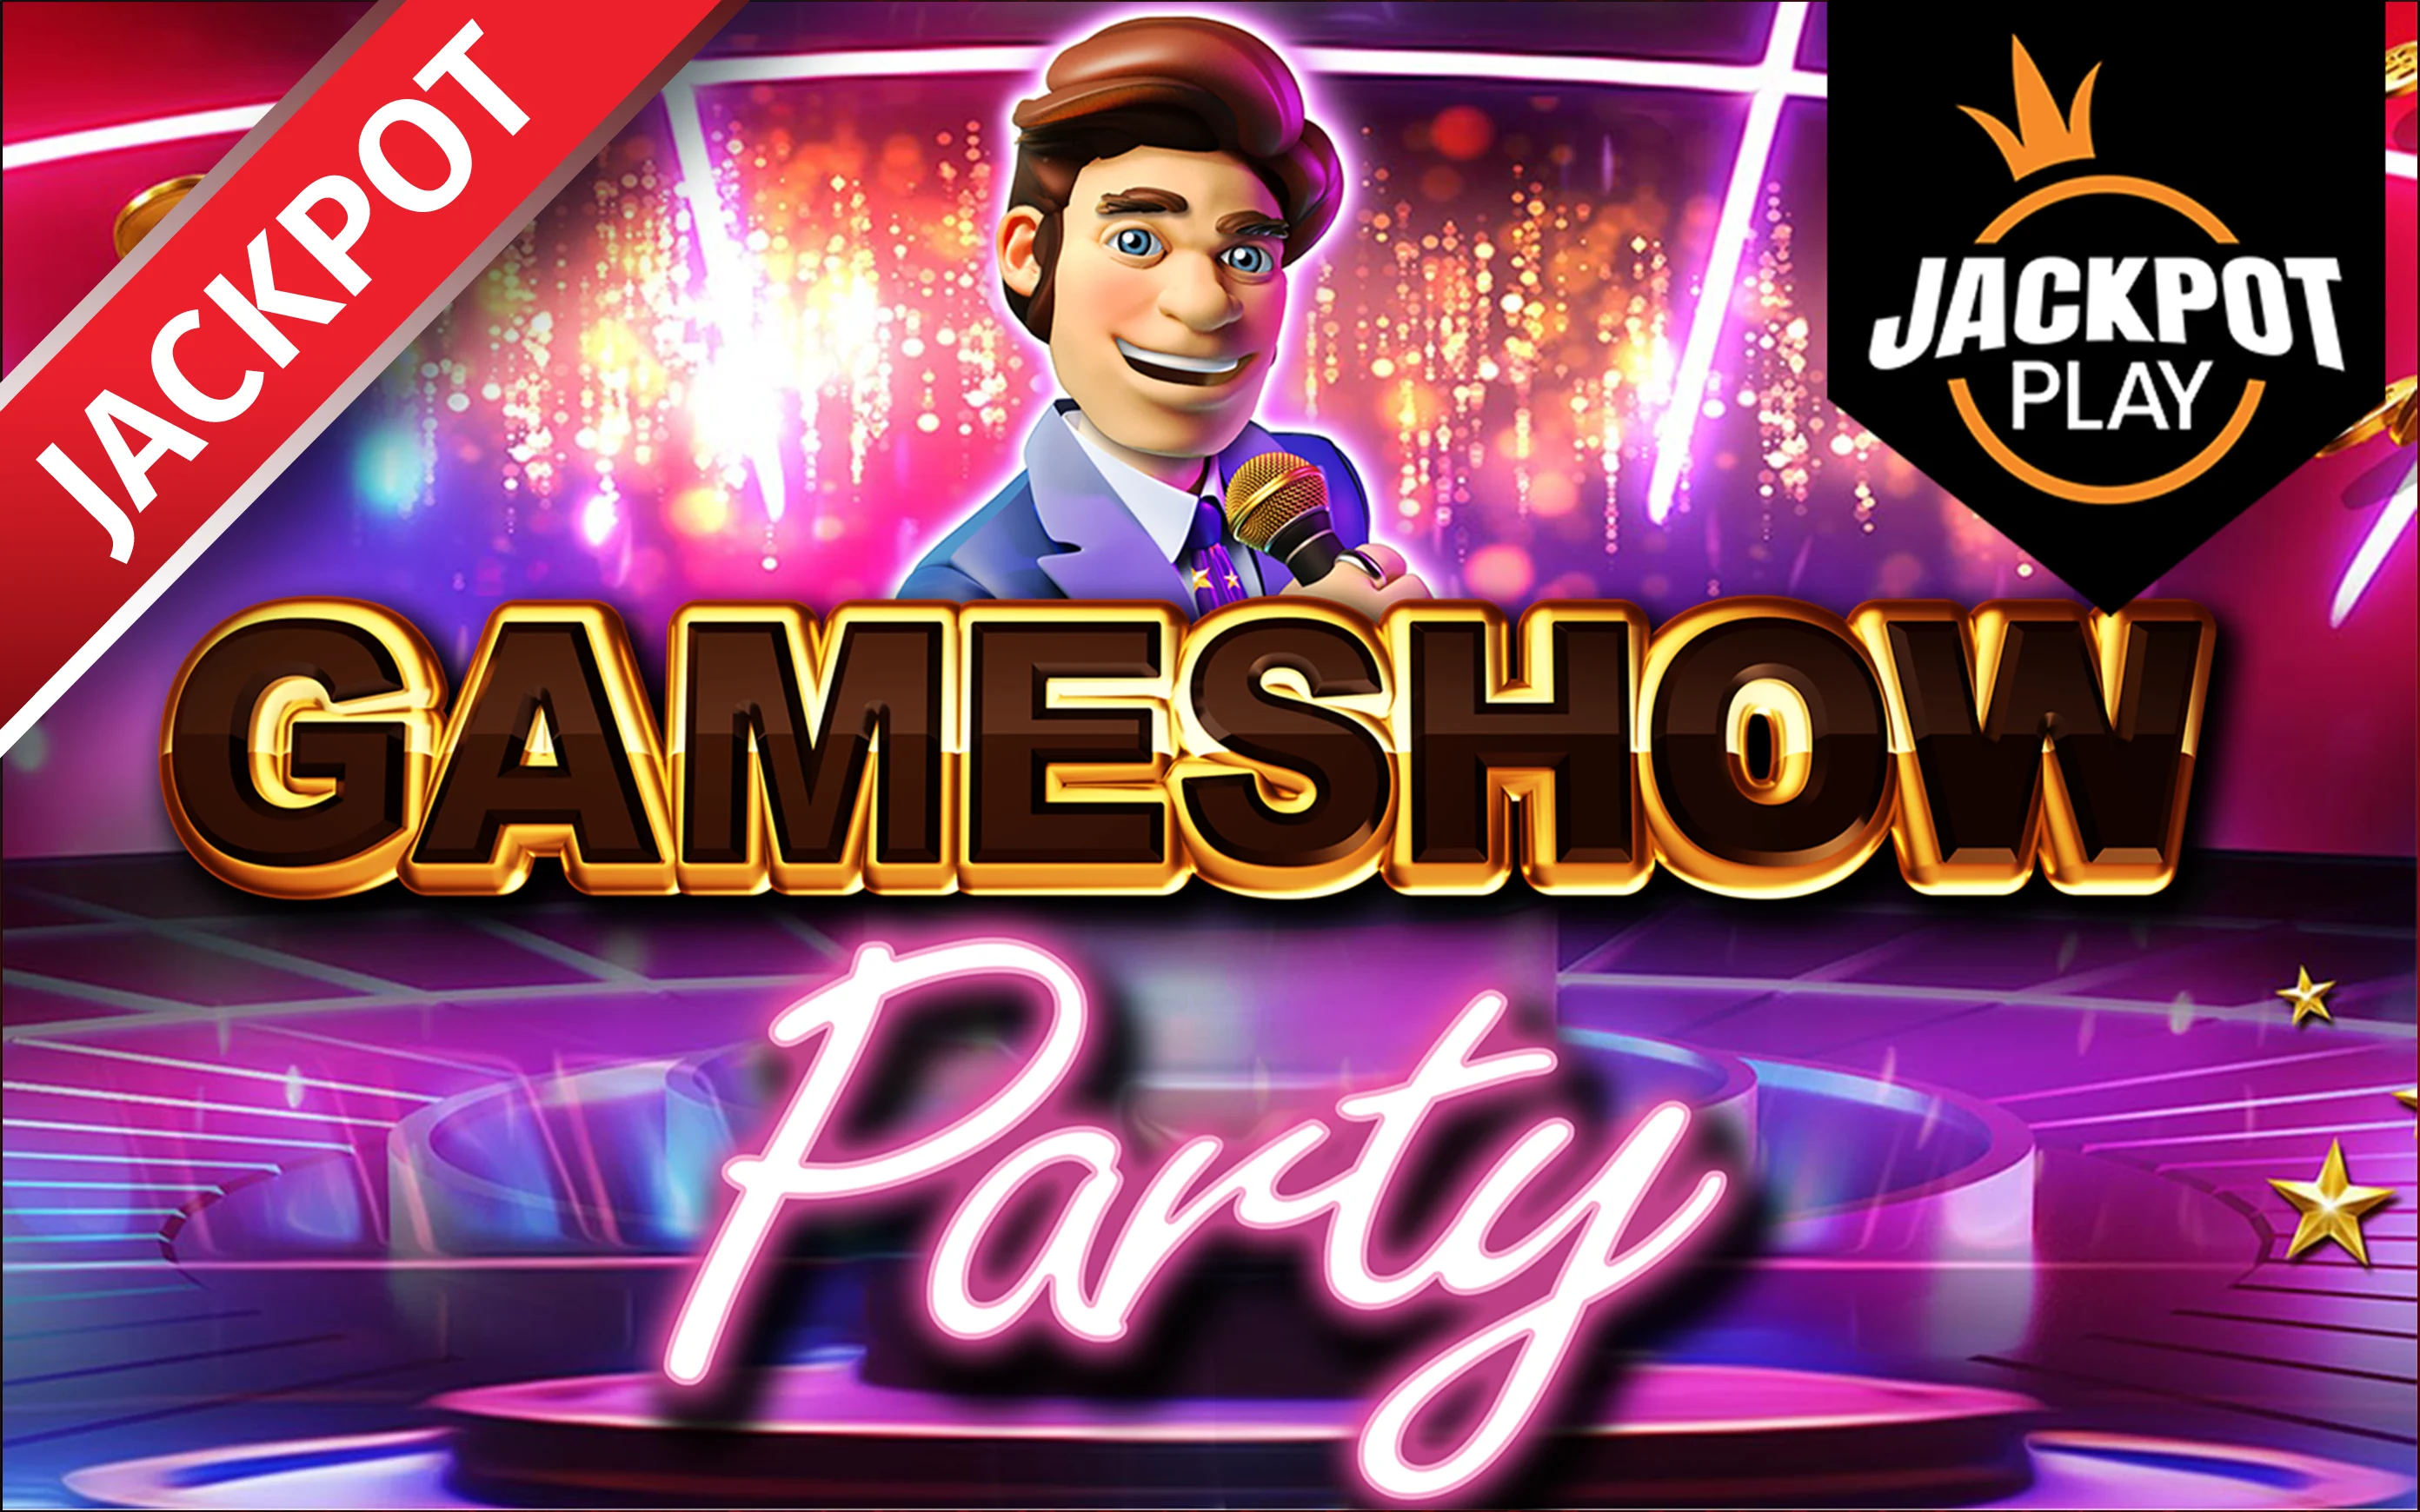 Starcasino.be online casino üzerinden Gameshow Party Jackpot Play oynayın